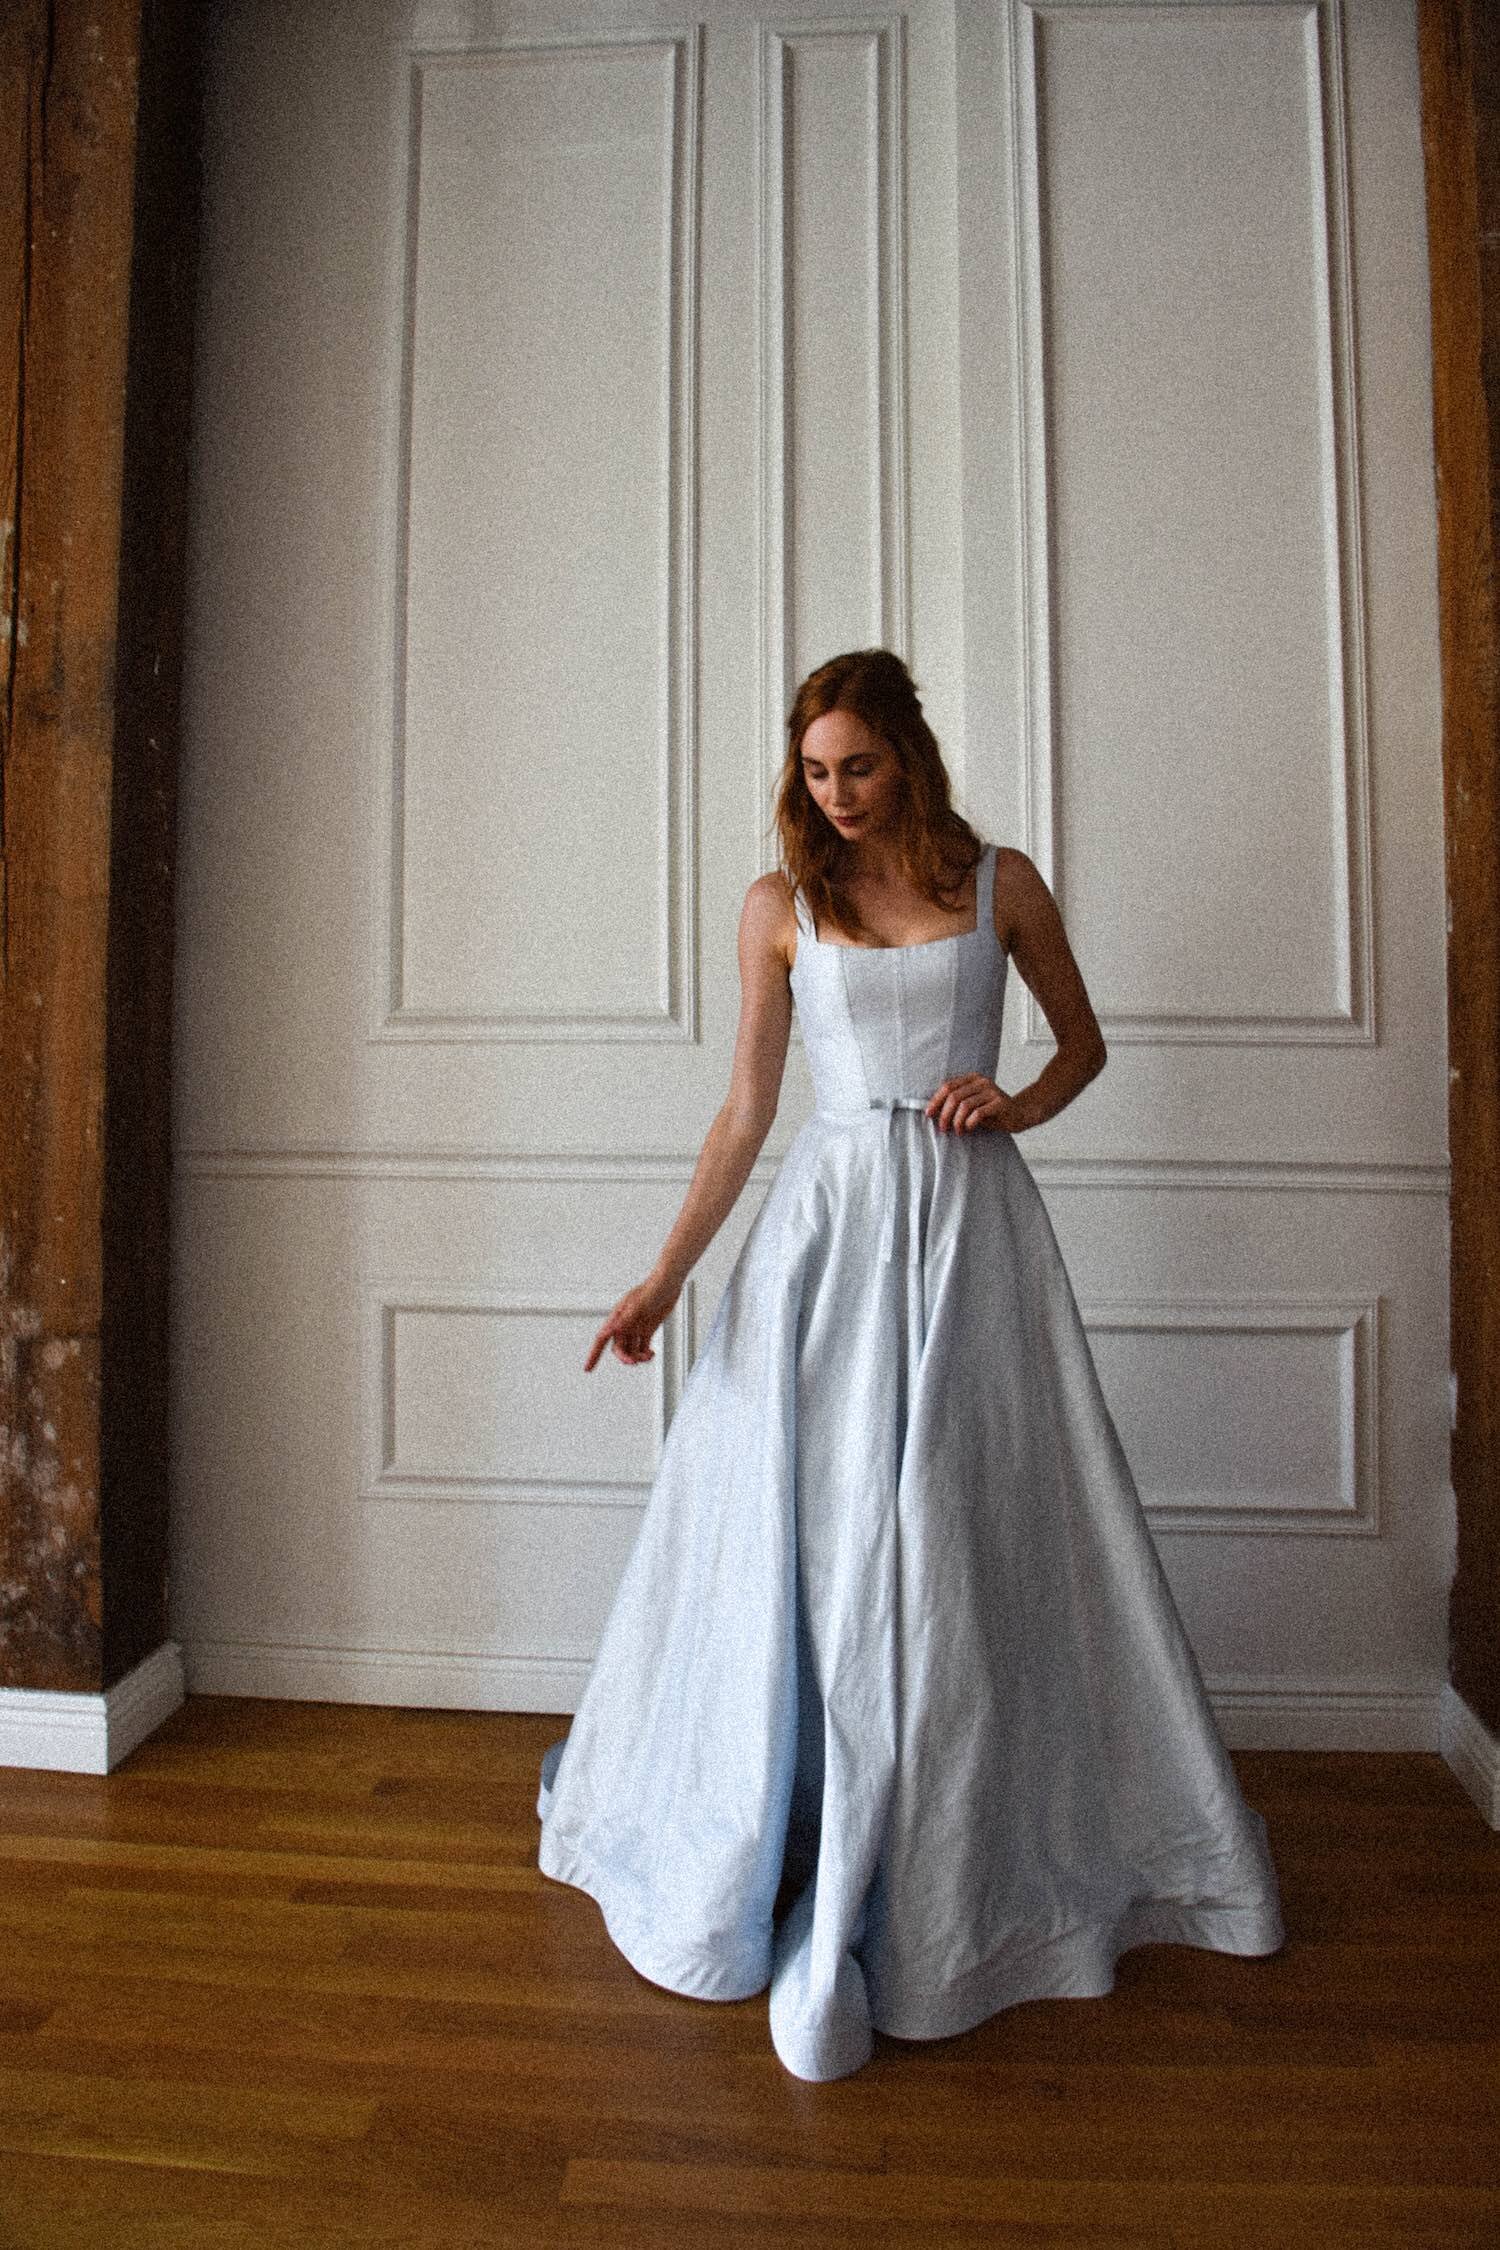 Austen gown powder blue wedding gown Dearheart by Carol Hannah1.jpeg